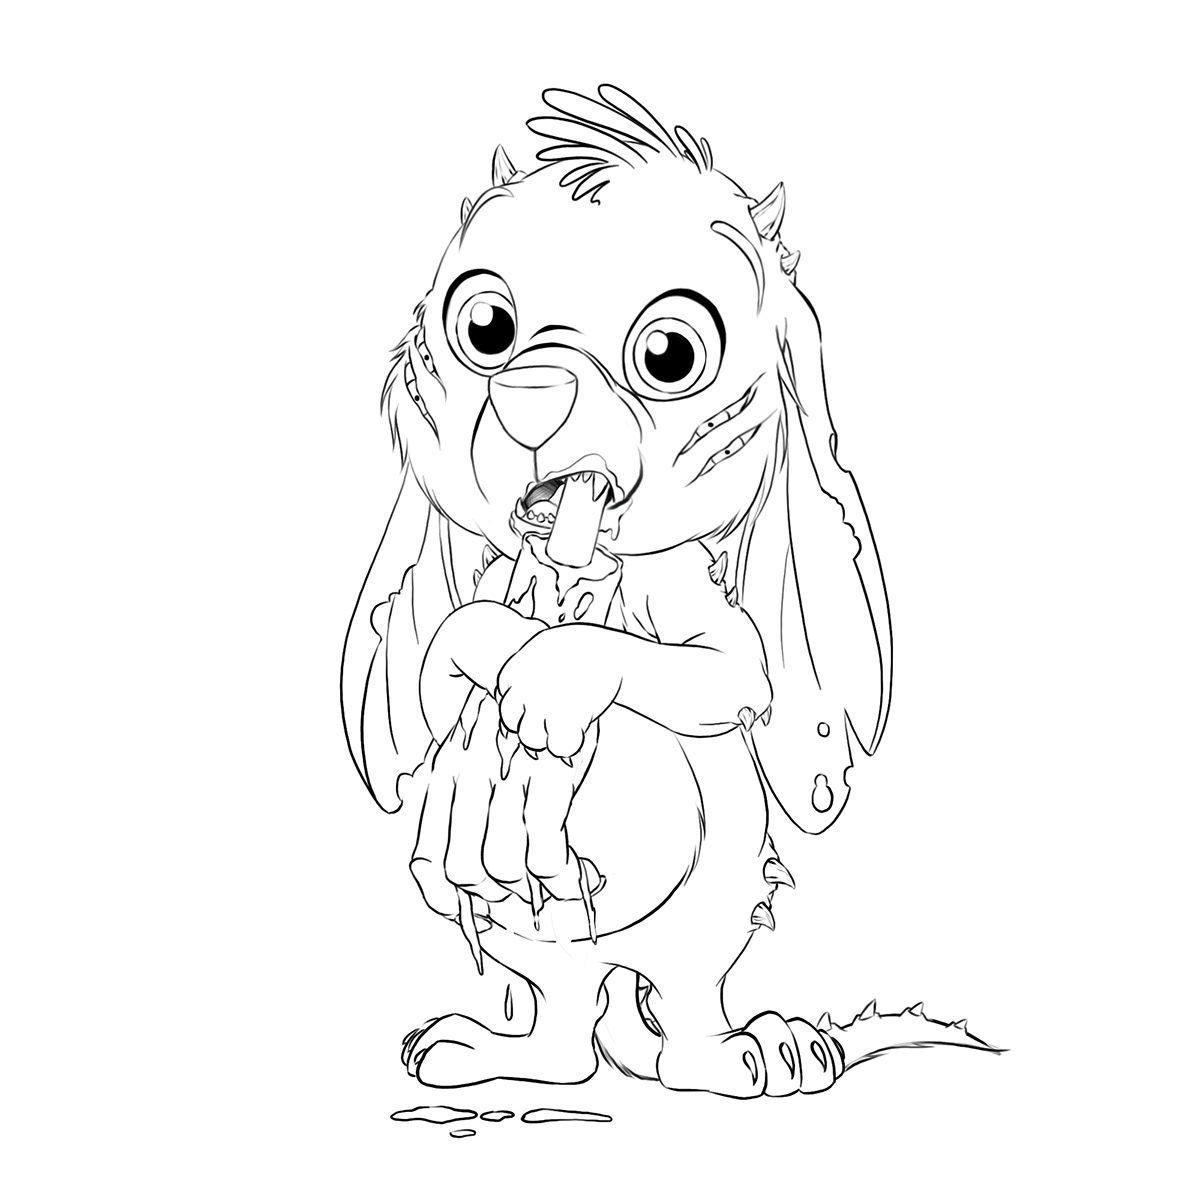 bunny Character characterconcept characterdesign creepy cute cutebutdeadly ILLUSTRATION  ipadpro Procreate